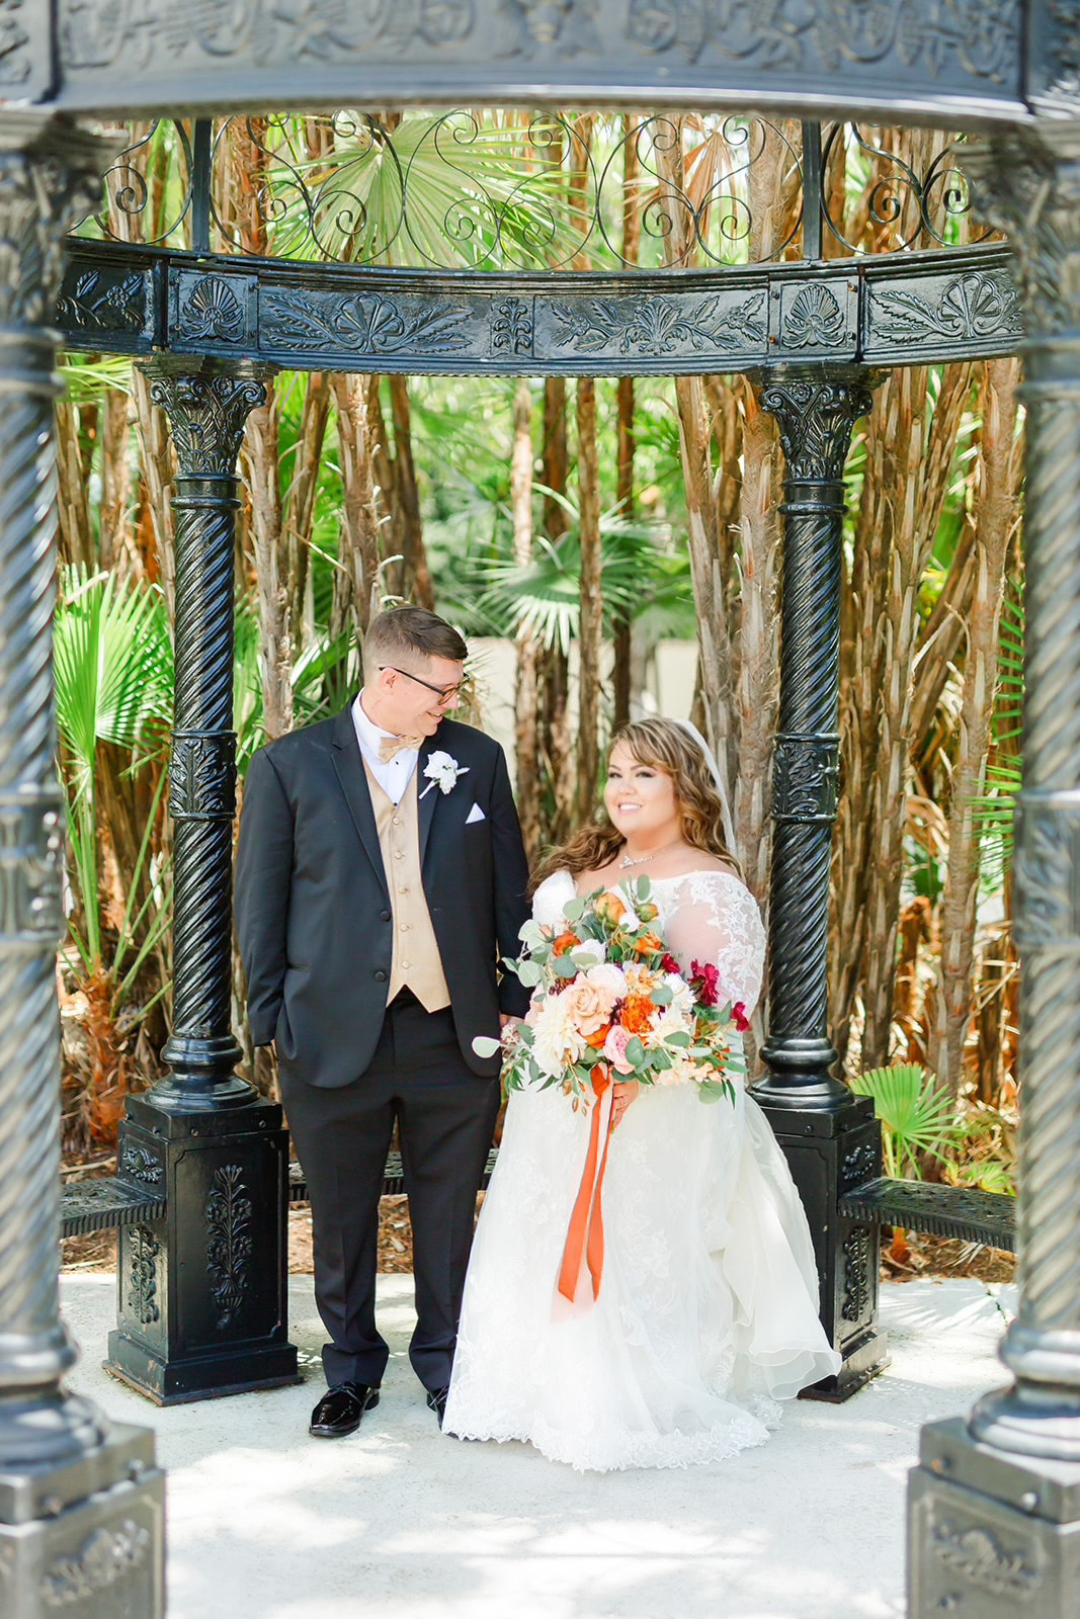 Autumn Wedding in Florida Blink Photography18 alternative wedding ideas from Offbeat Wed (formerly Offbeat Bride)